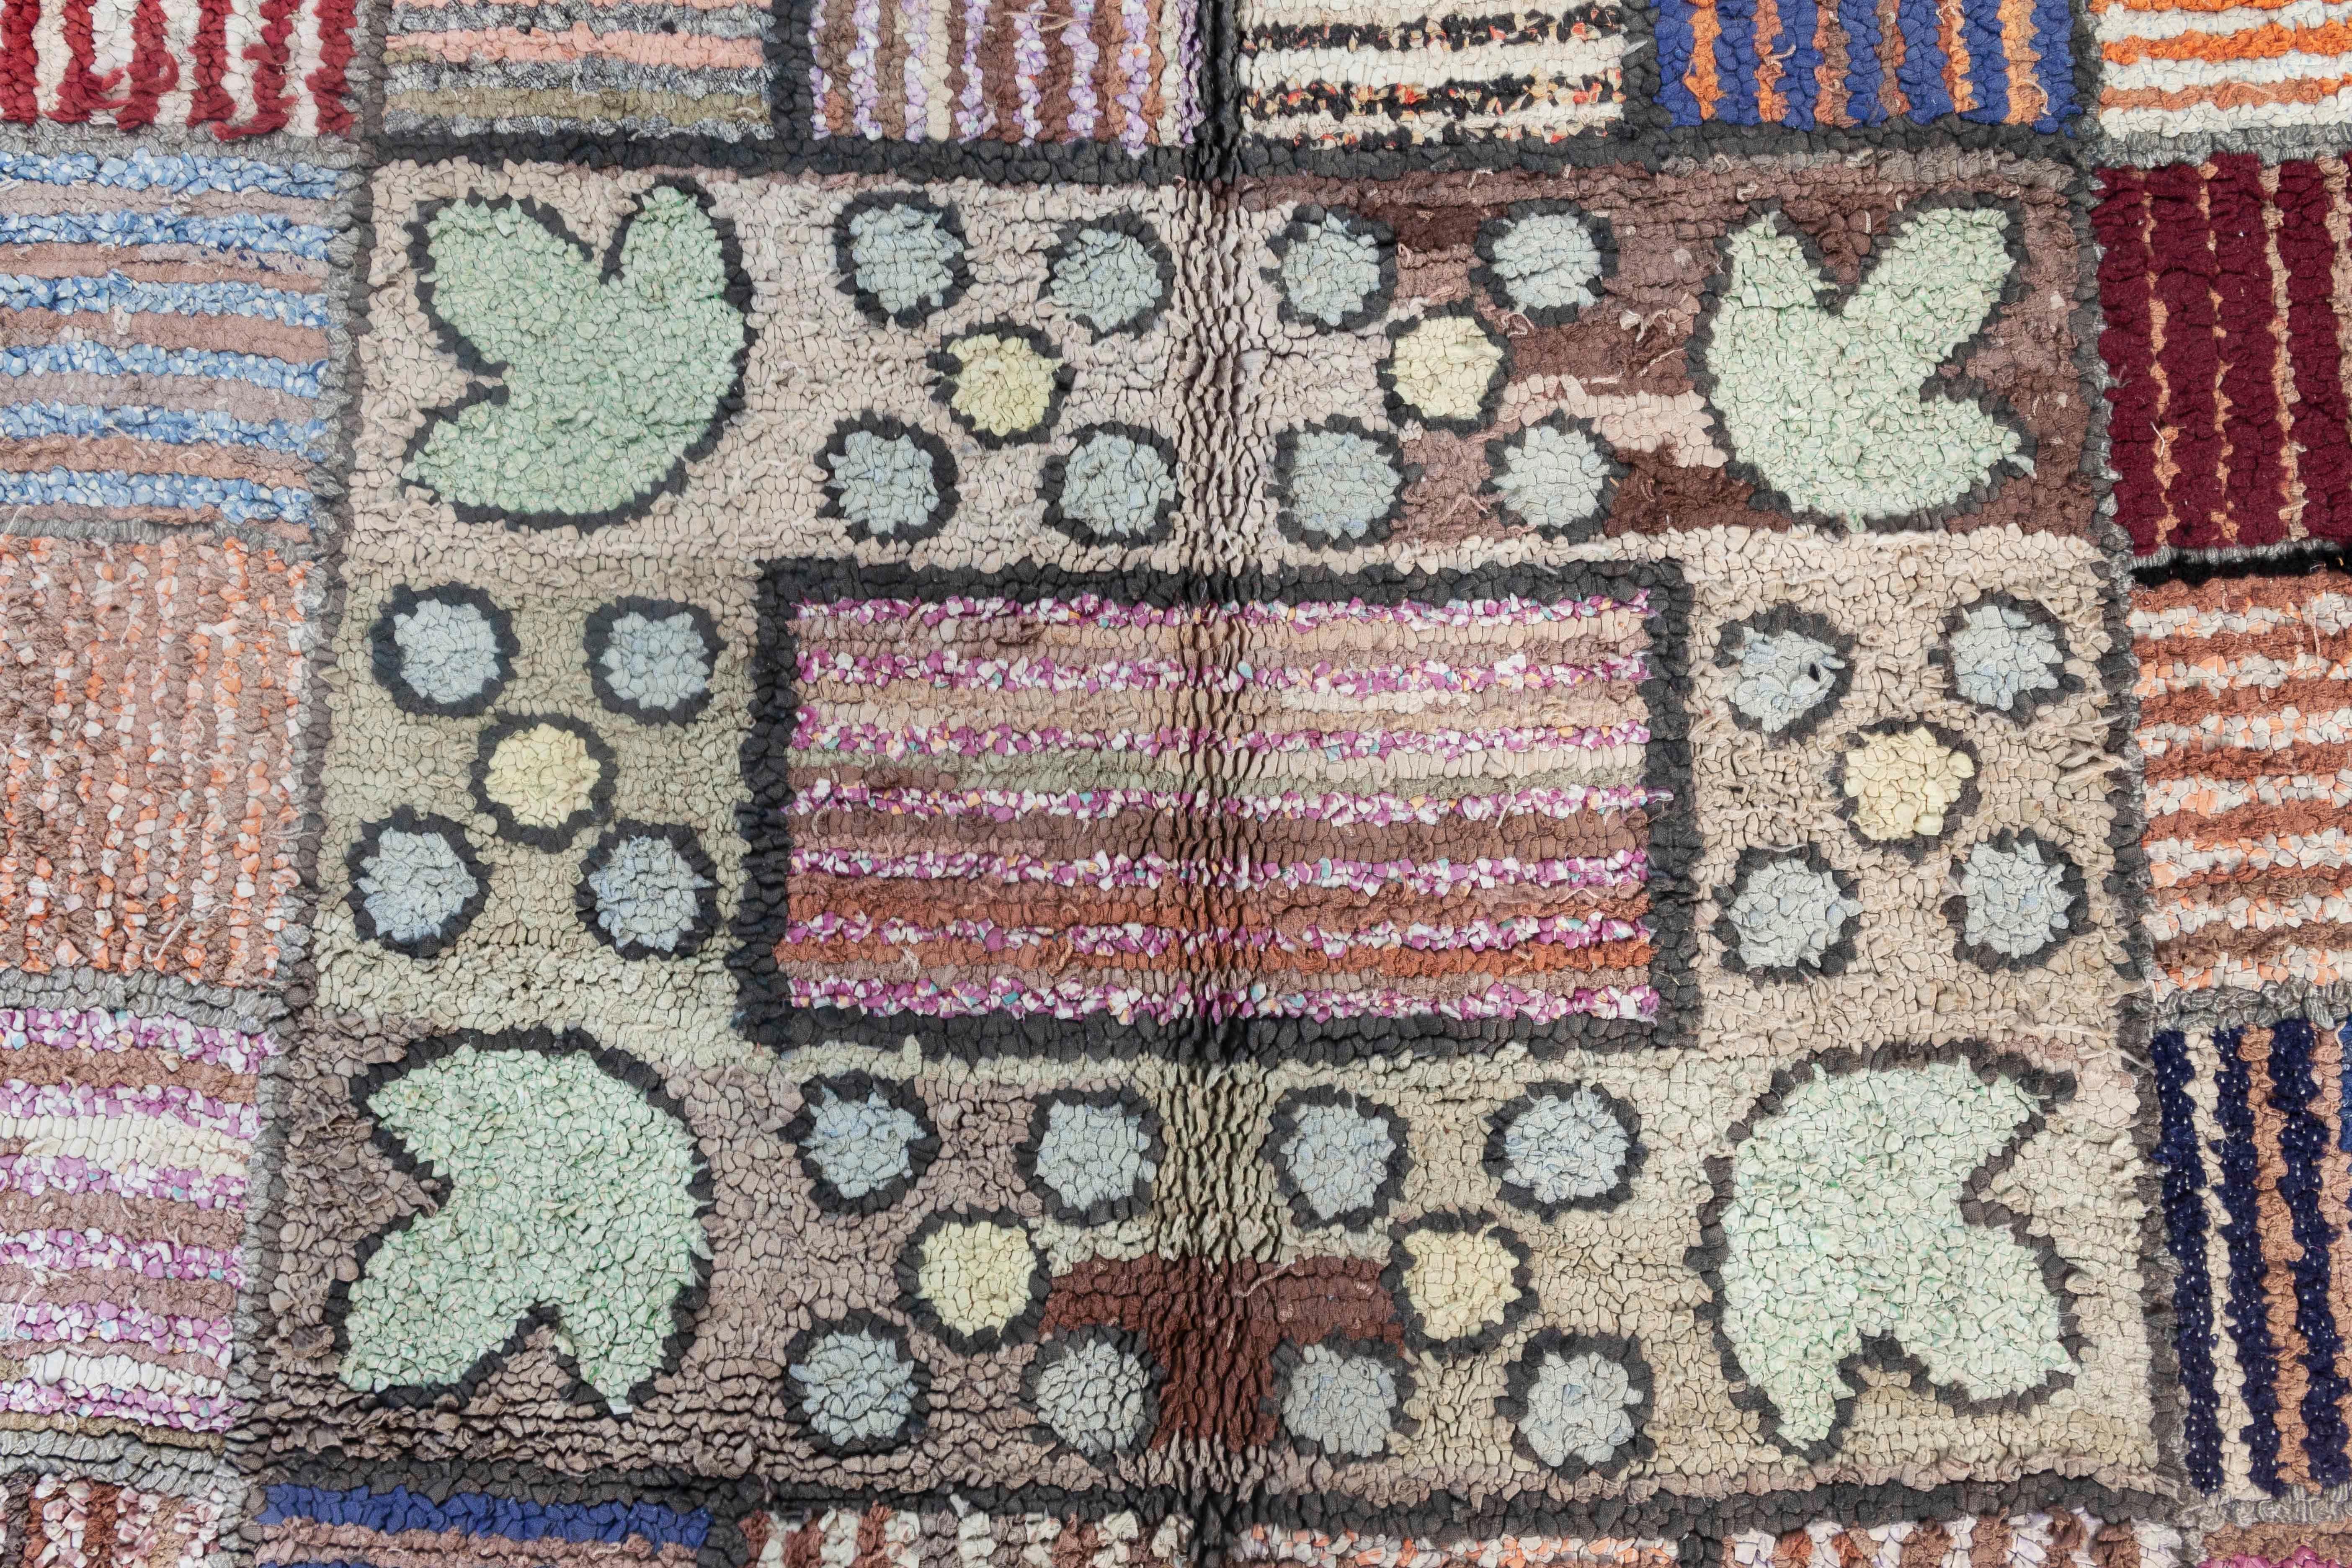 Vintage American Hooked rug.
Size: 8'0